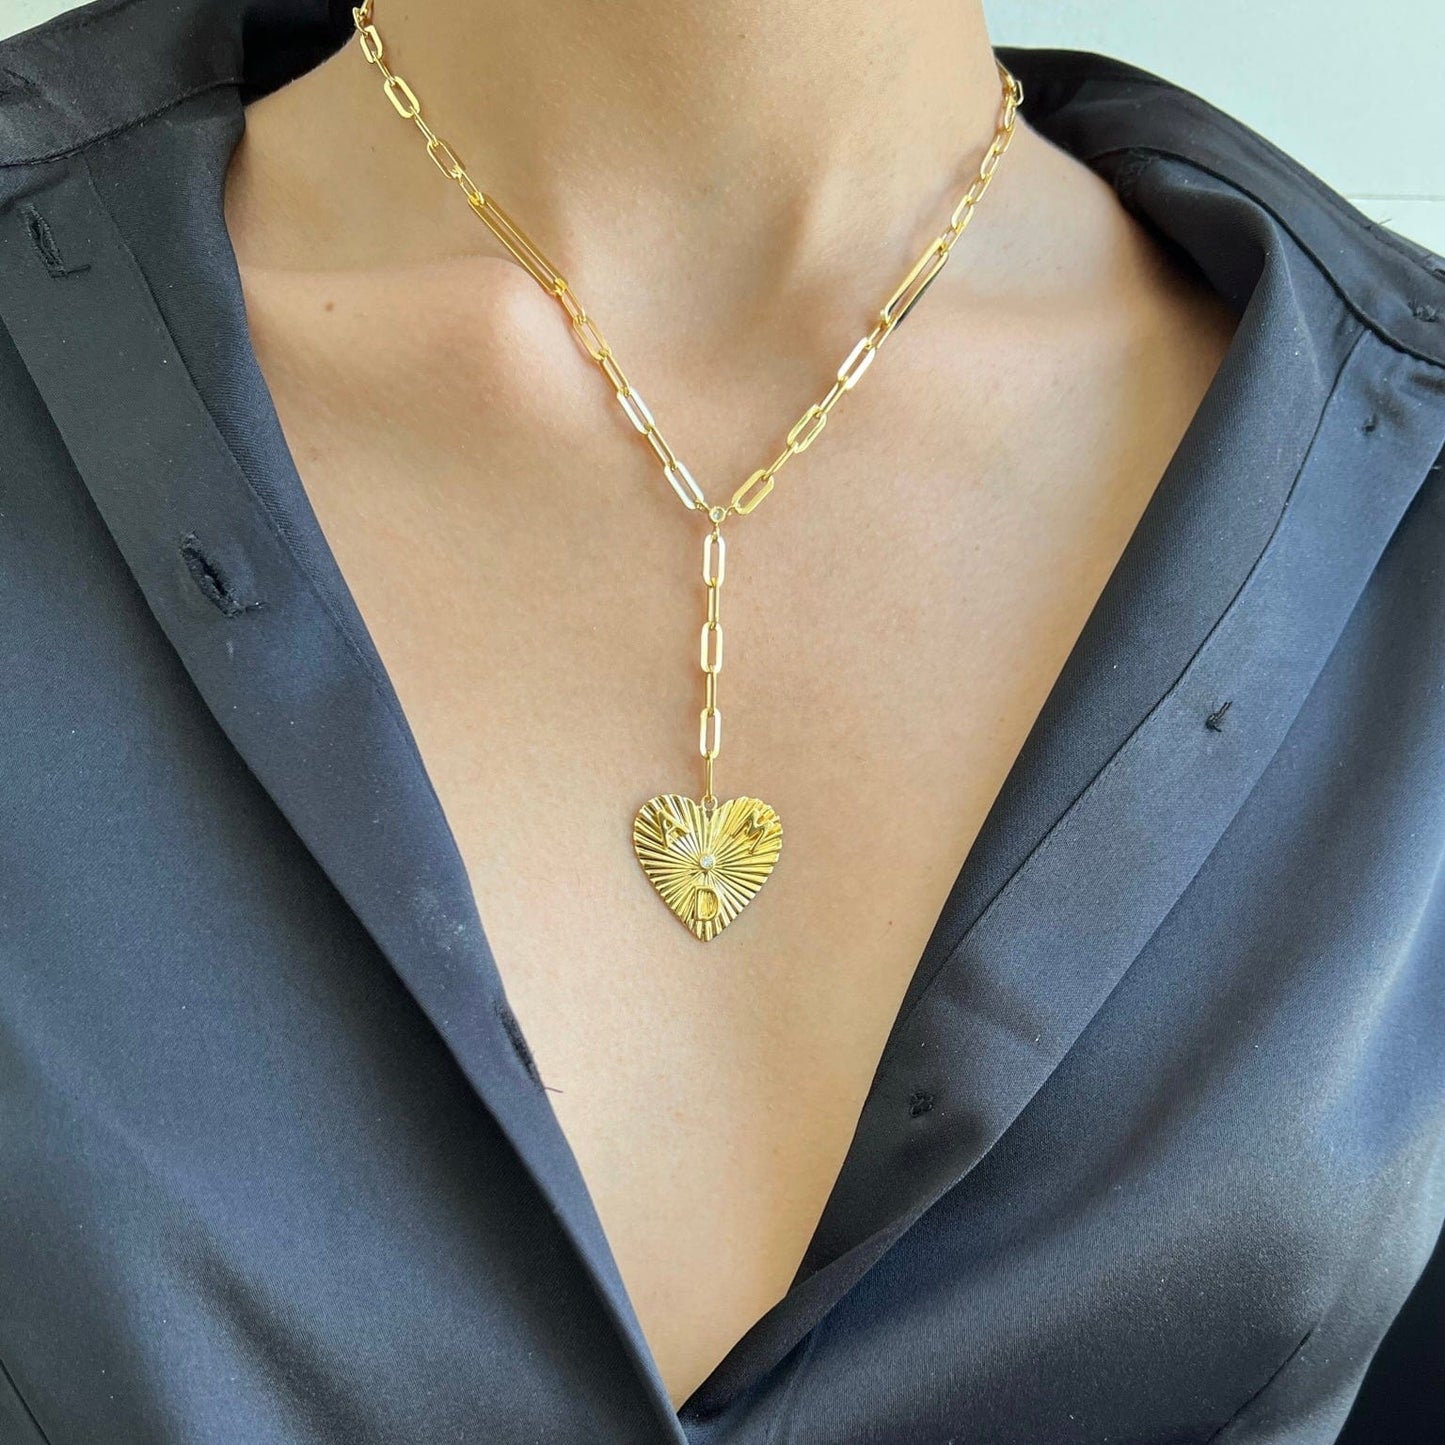 Gold Lariat Necklace